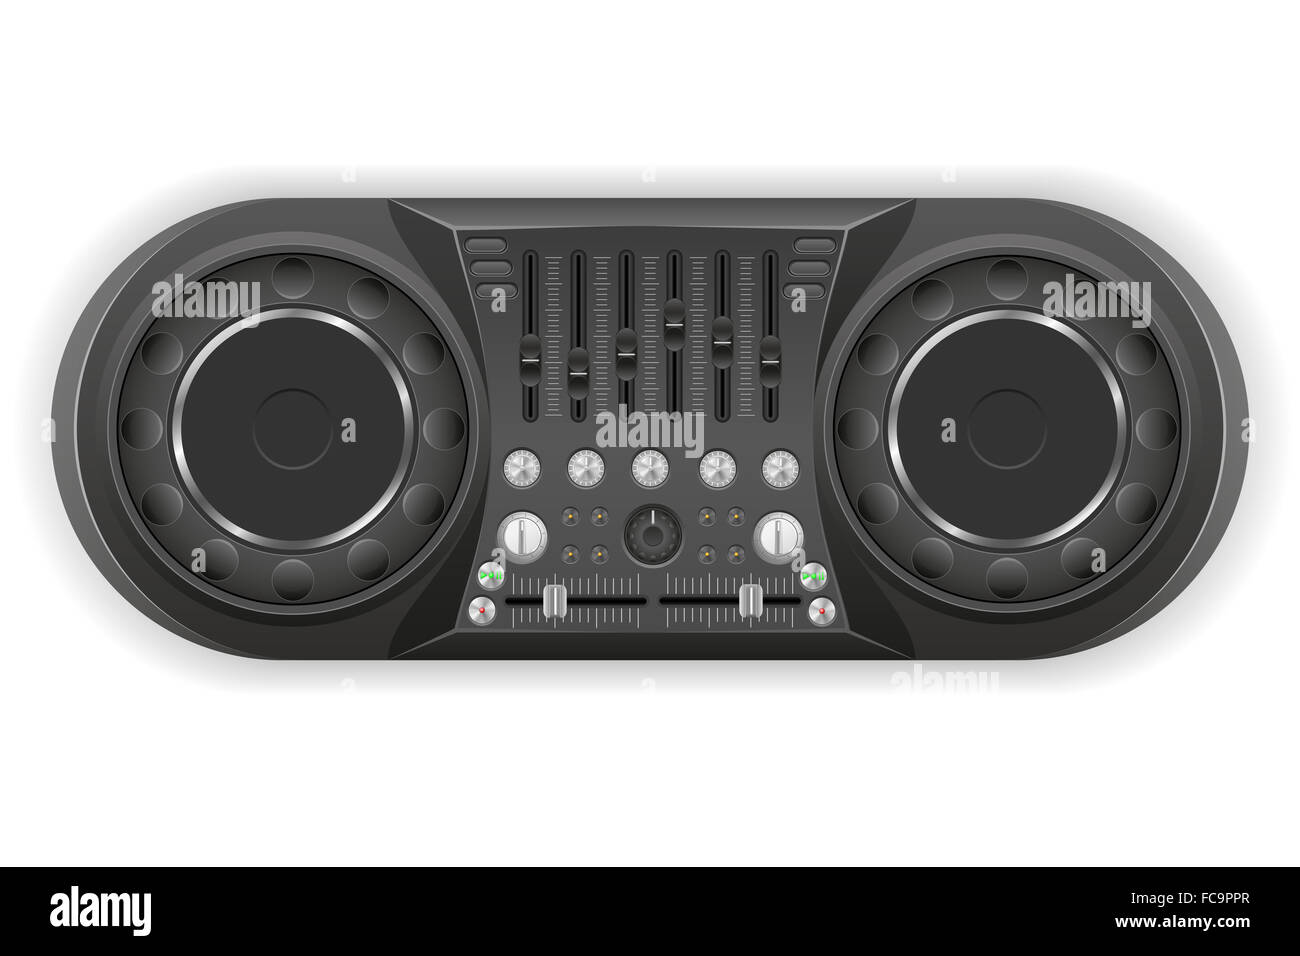 dj panel console sound mixer illustration isolated on white background Stock Photo